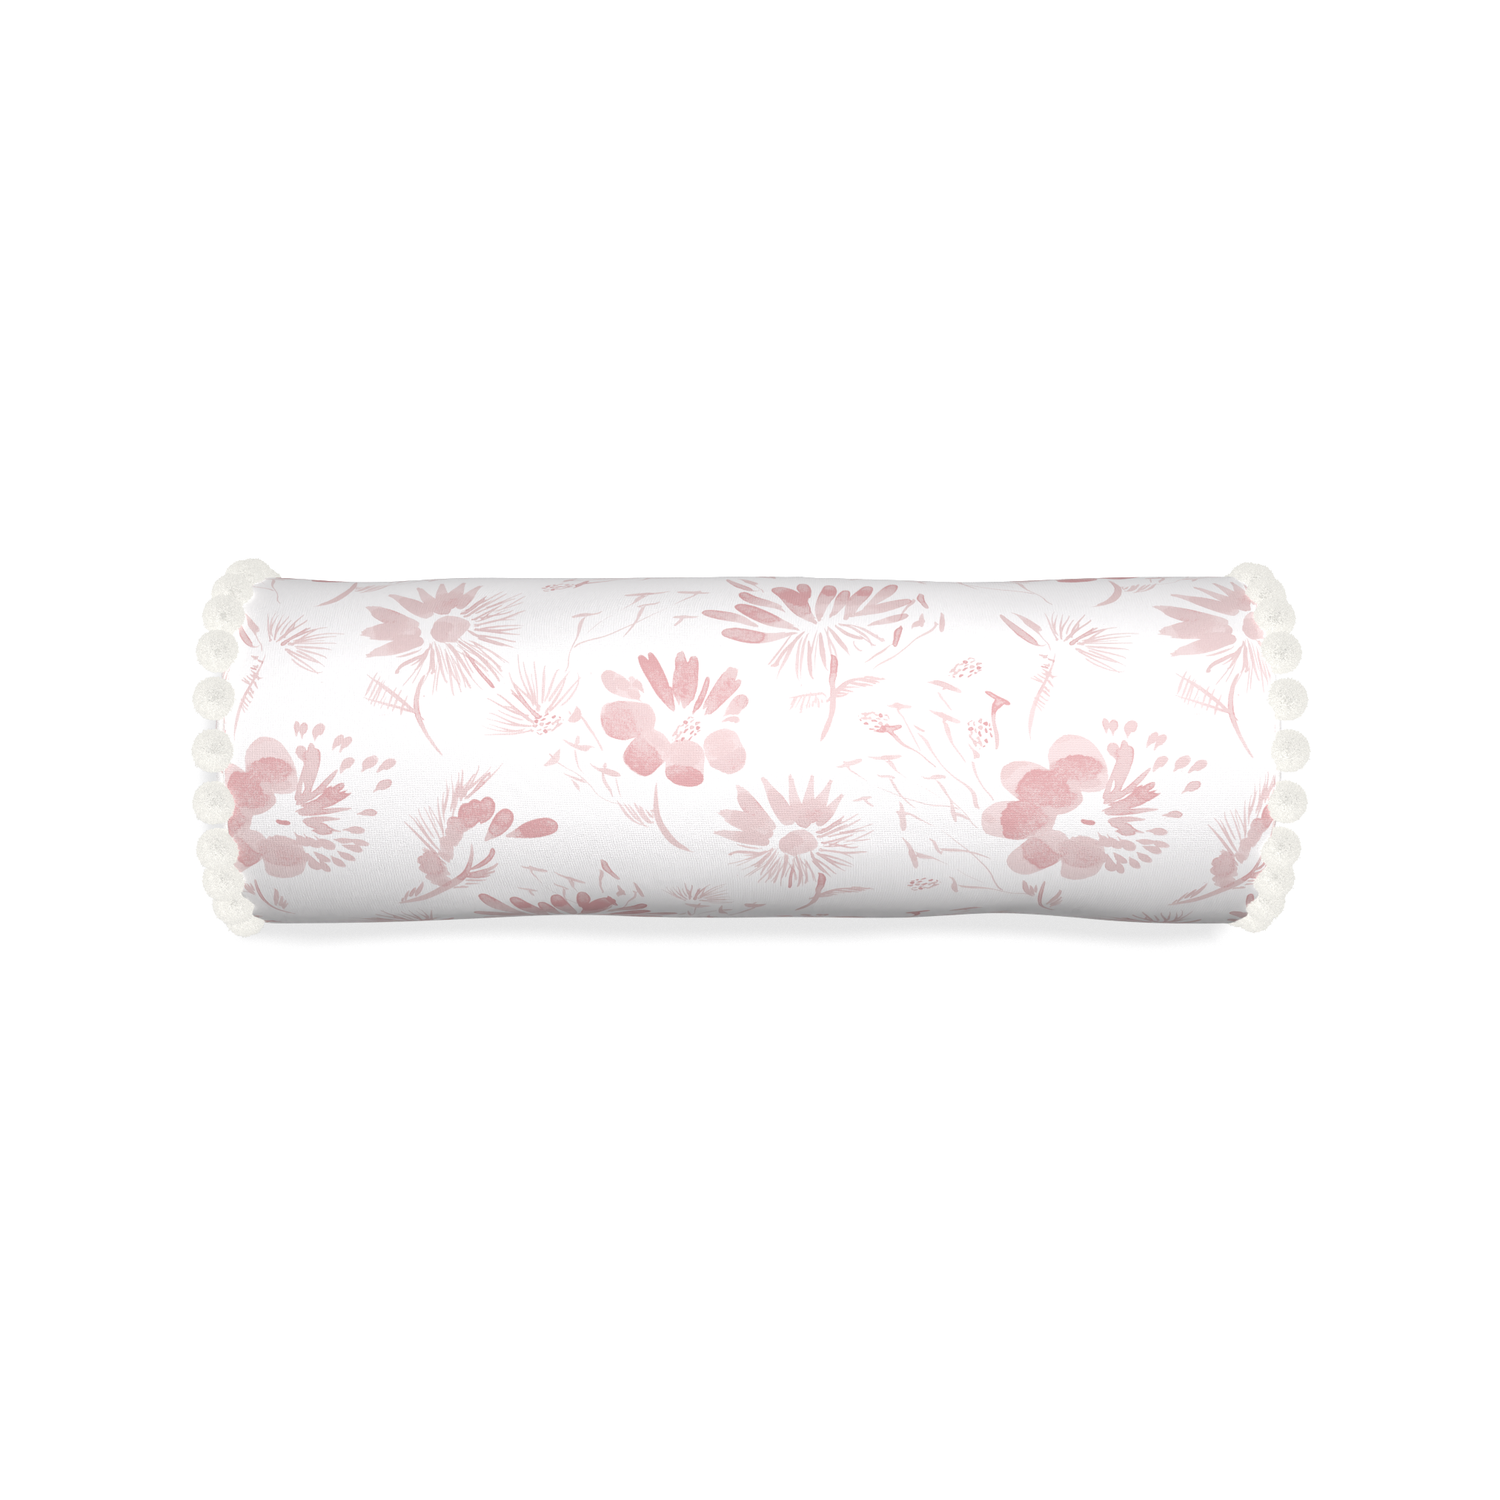 Bolster blake custom pink floralpillow with snow pom pom on white background